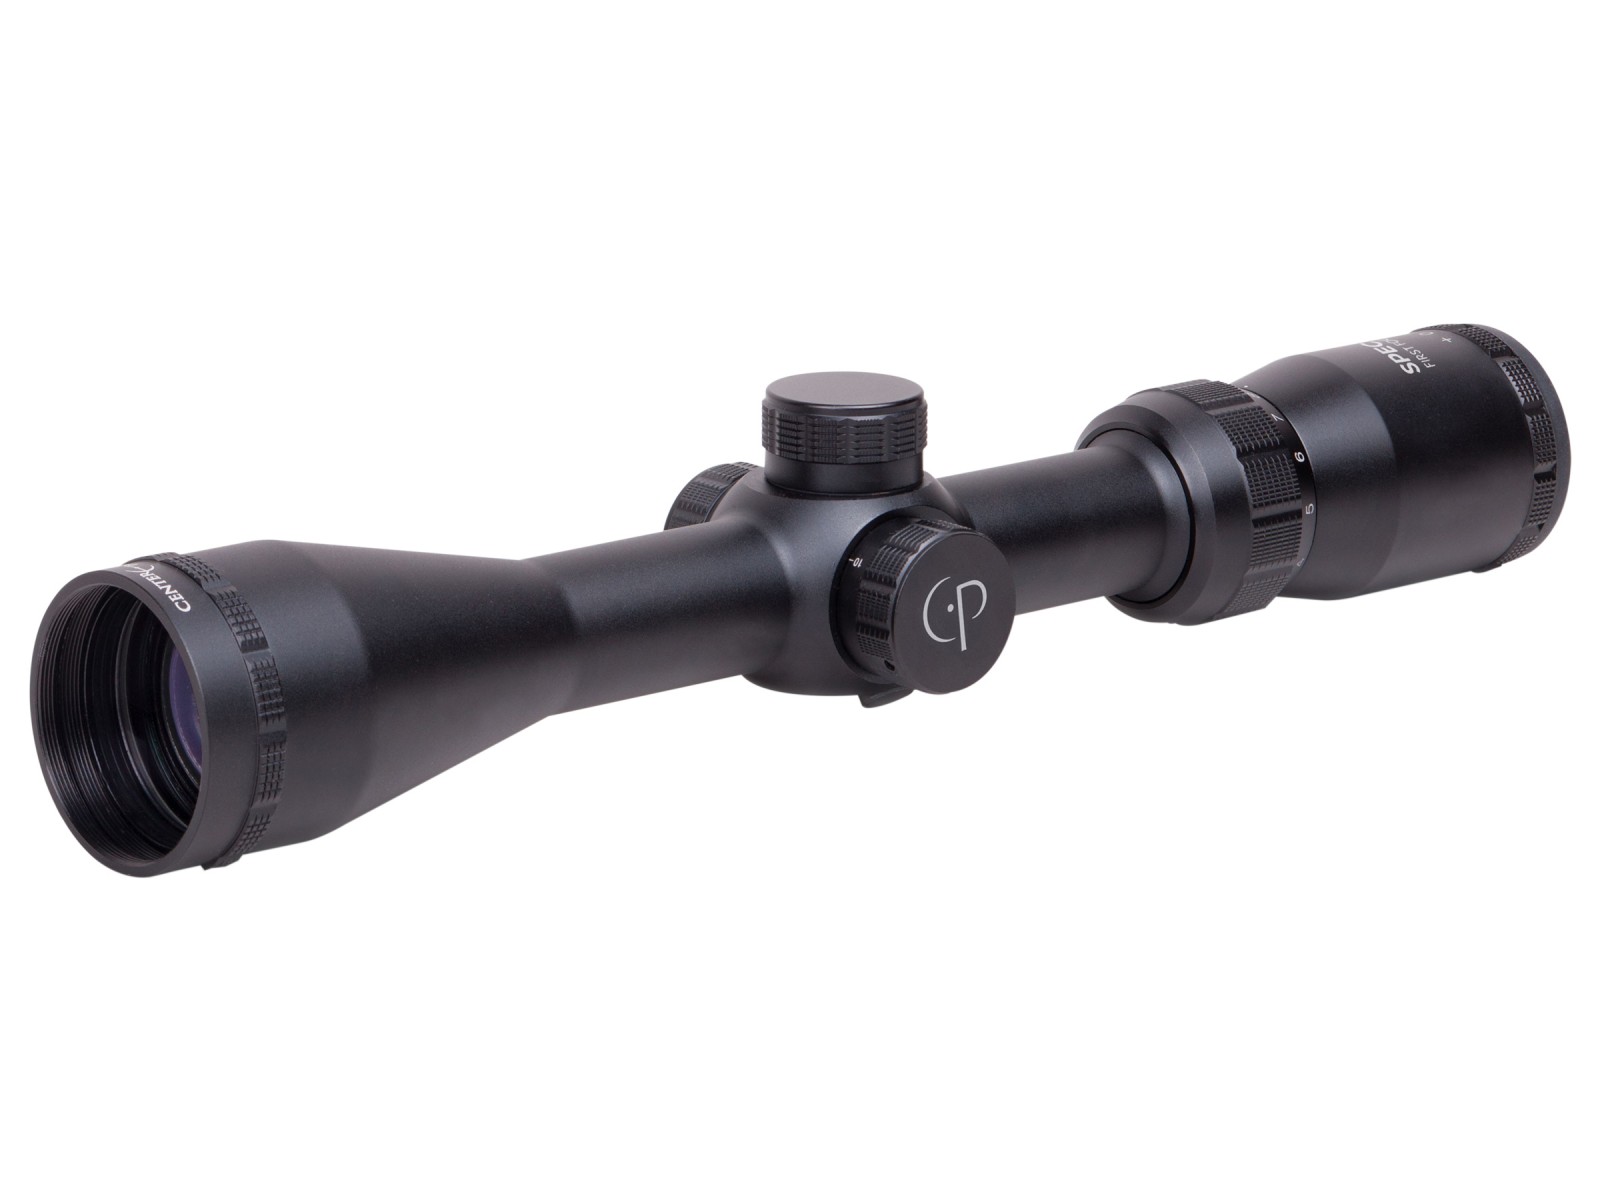 CenterPoint 4-12x44mm SF Spectrum FFP Long Range Rifle Scope 1/4 MOA, 1" Tube